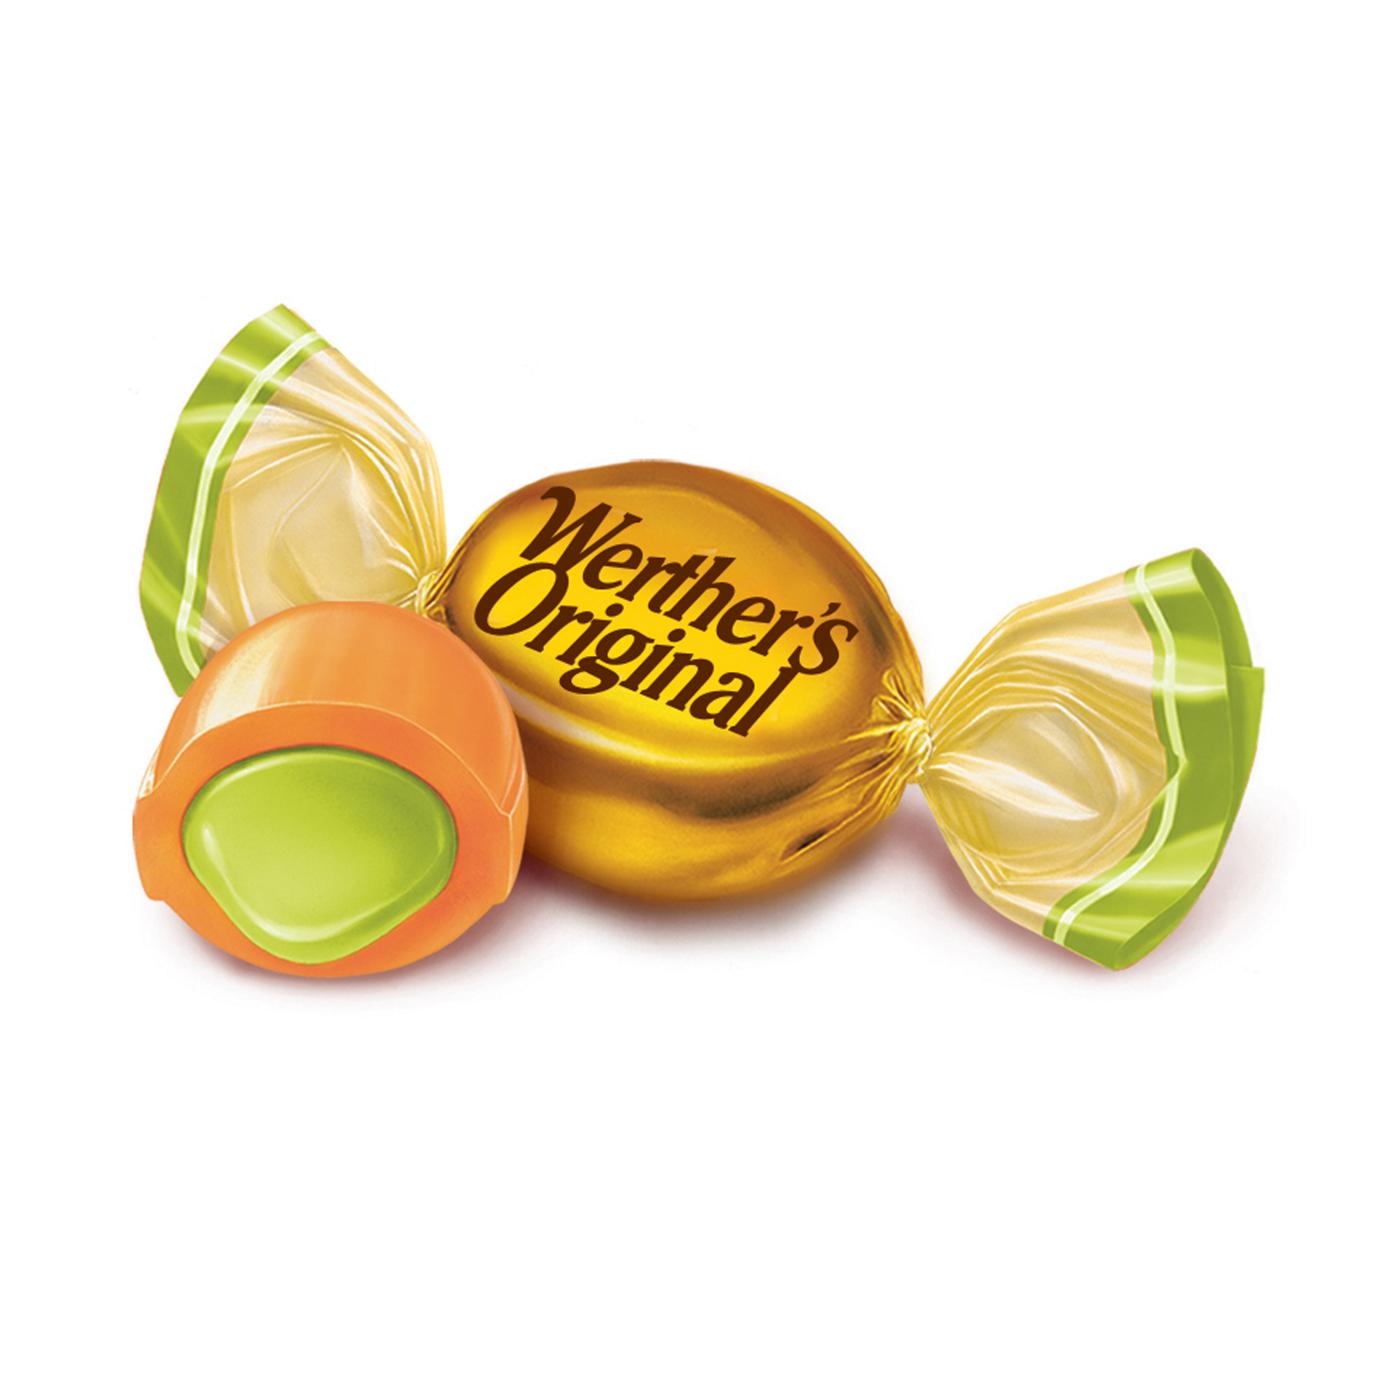 Werther's Original Hard Apple Filled Caramel Candy; image 3 of 6